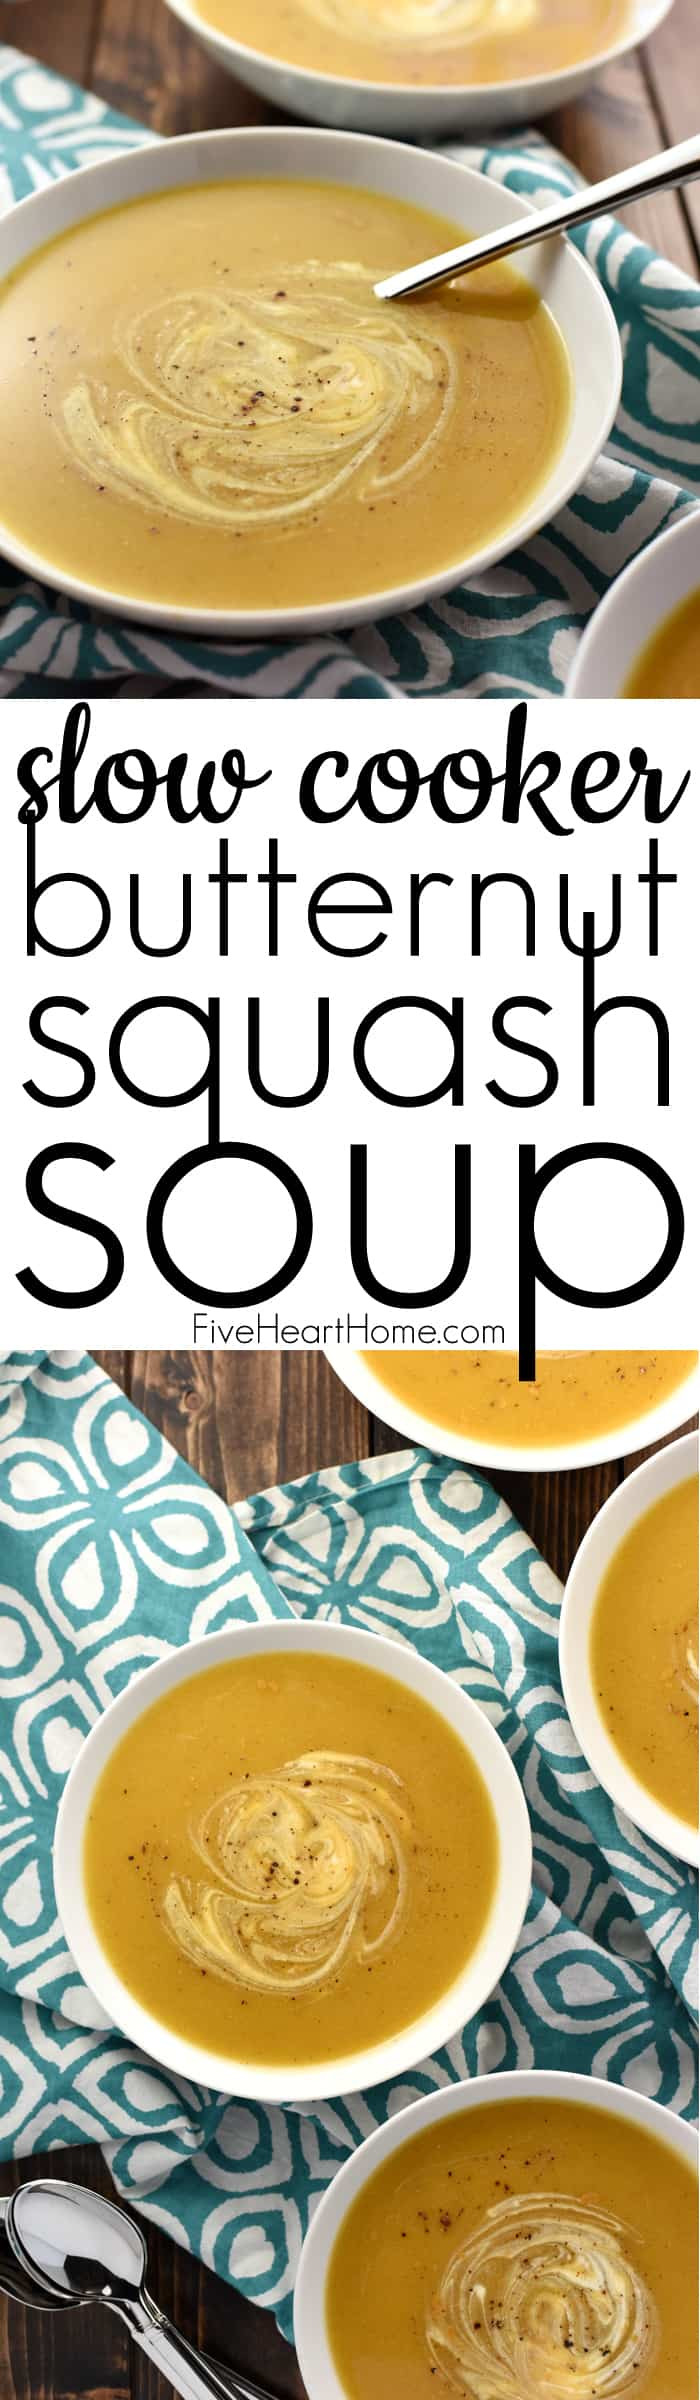 Slow Cooker Butternut Squash Soup
 